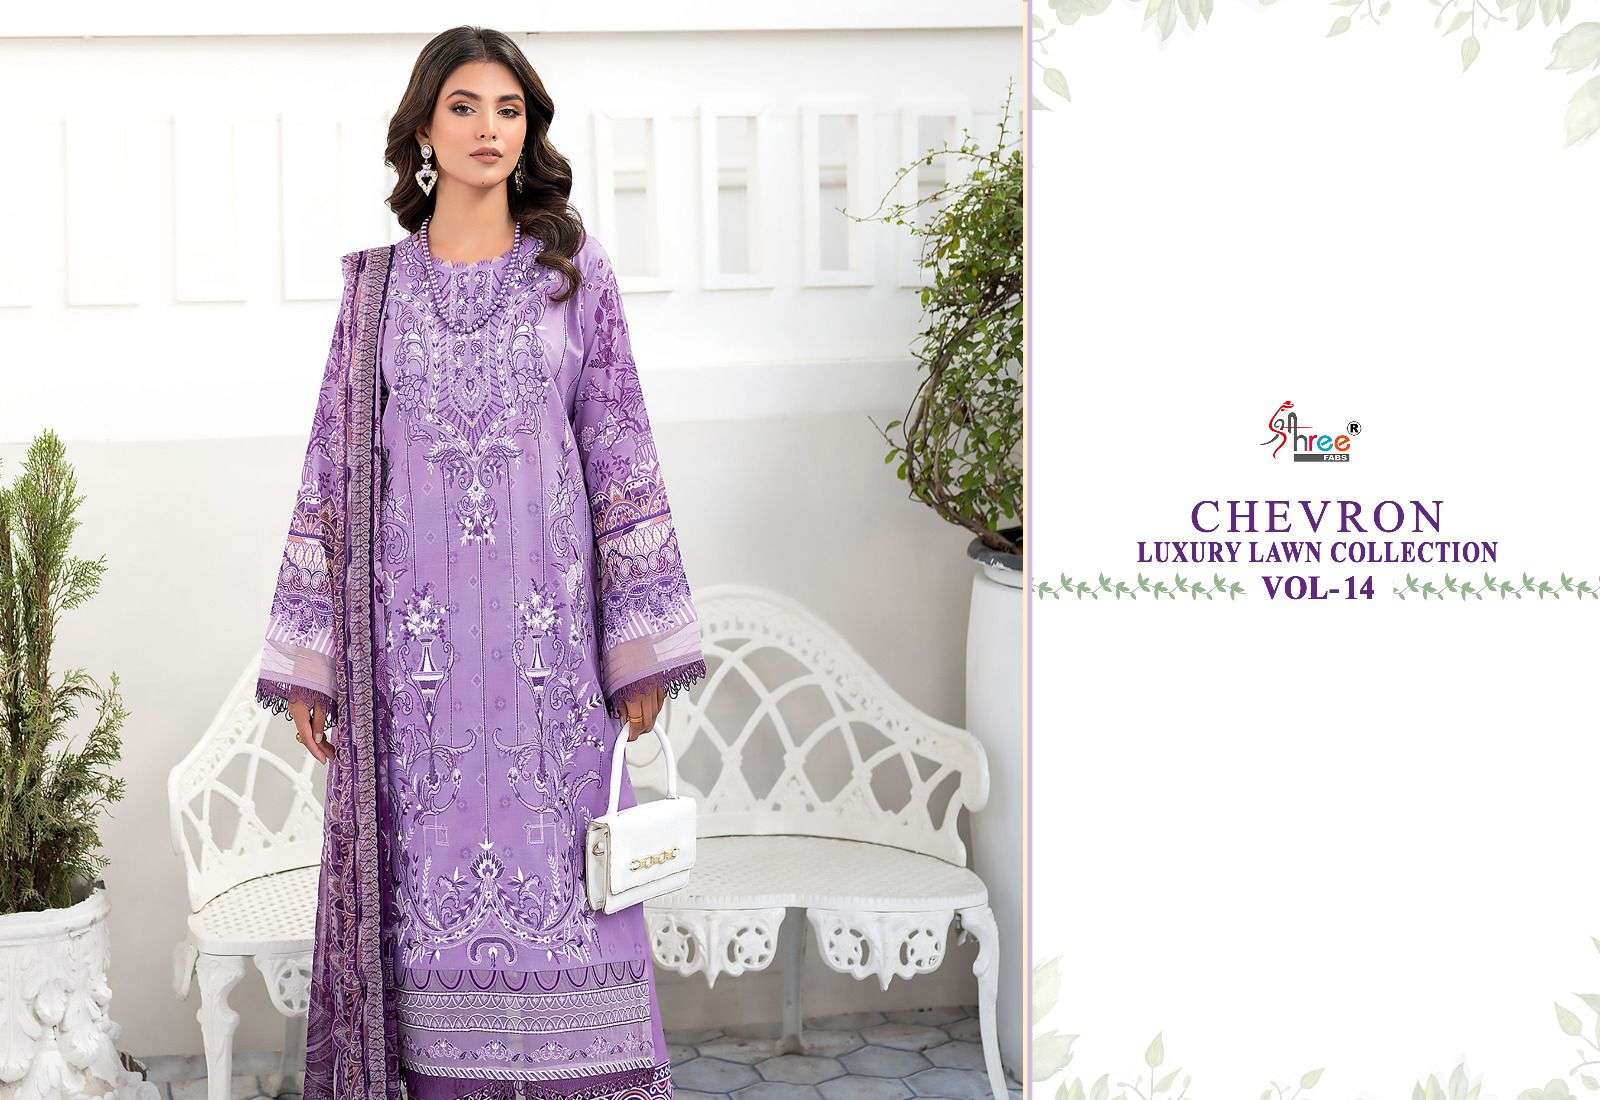 shree fabs chevron vol-14 3028-3035 series exclusive designer pakistani salwar suits wholesale rates in surat